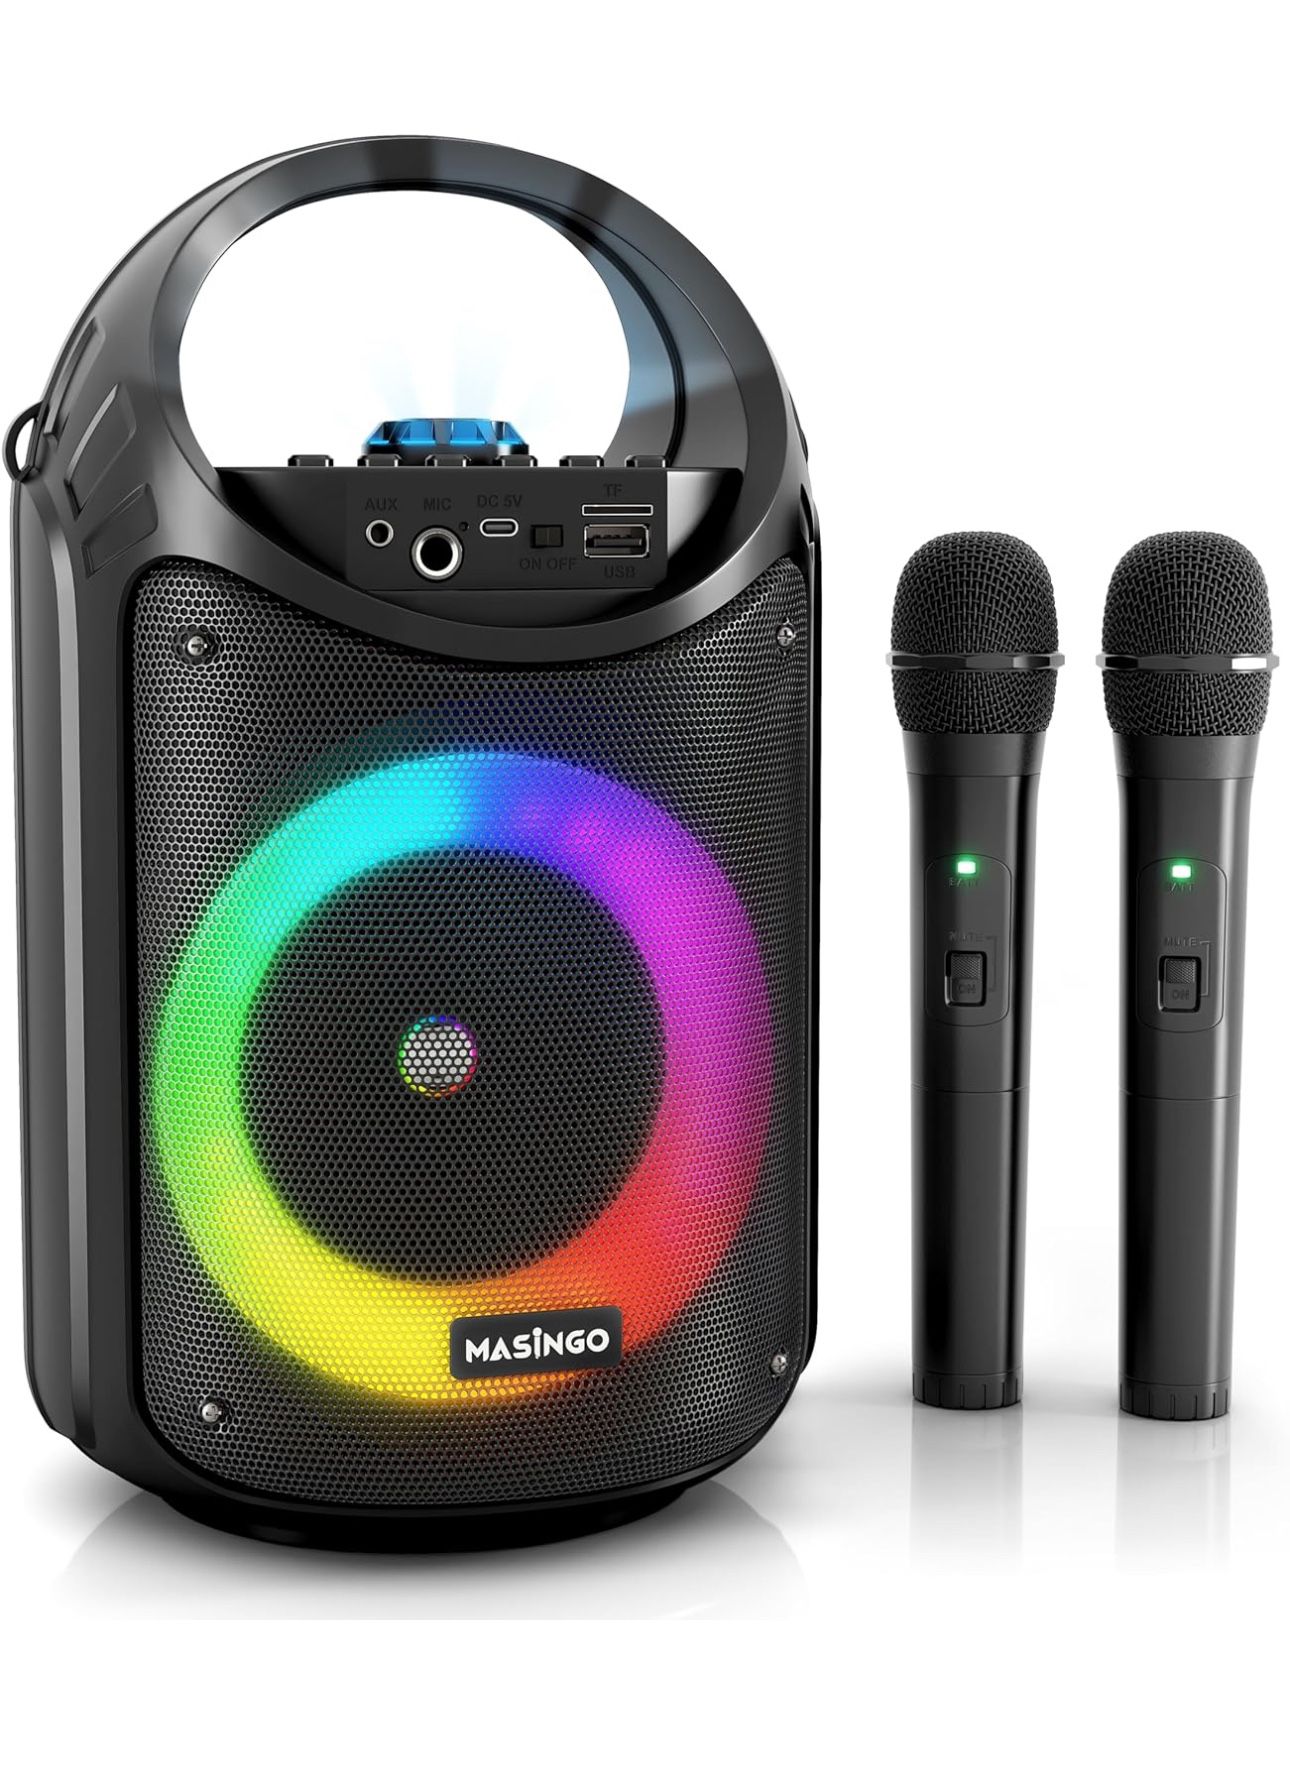 Brand New In Box Karaoke Speaker System And 2 Wireless Mics! 